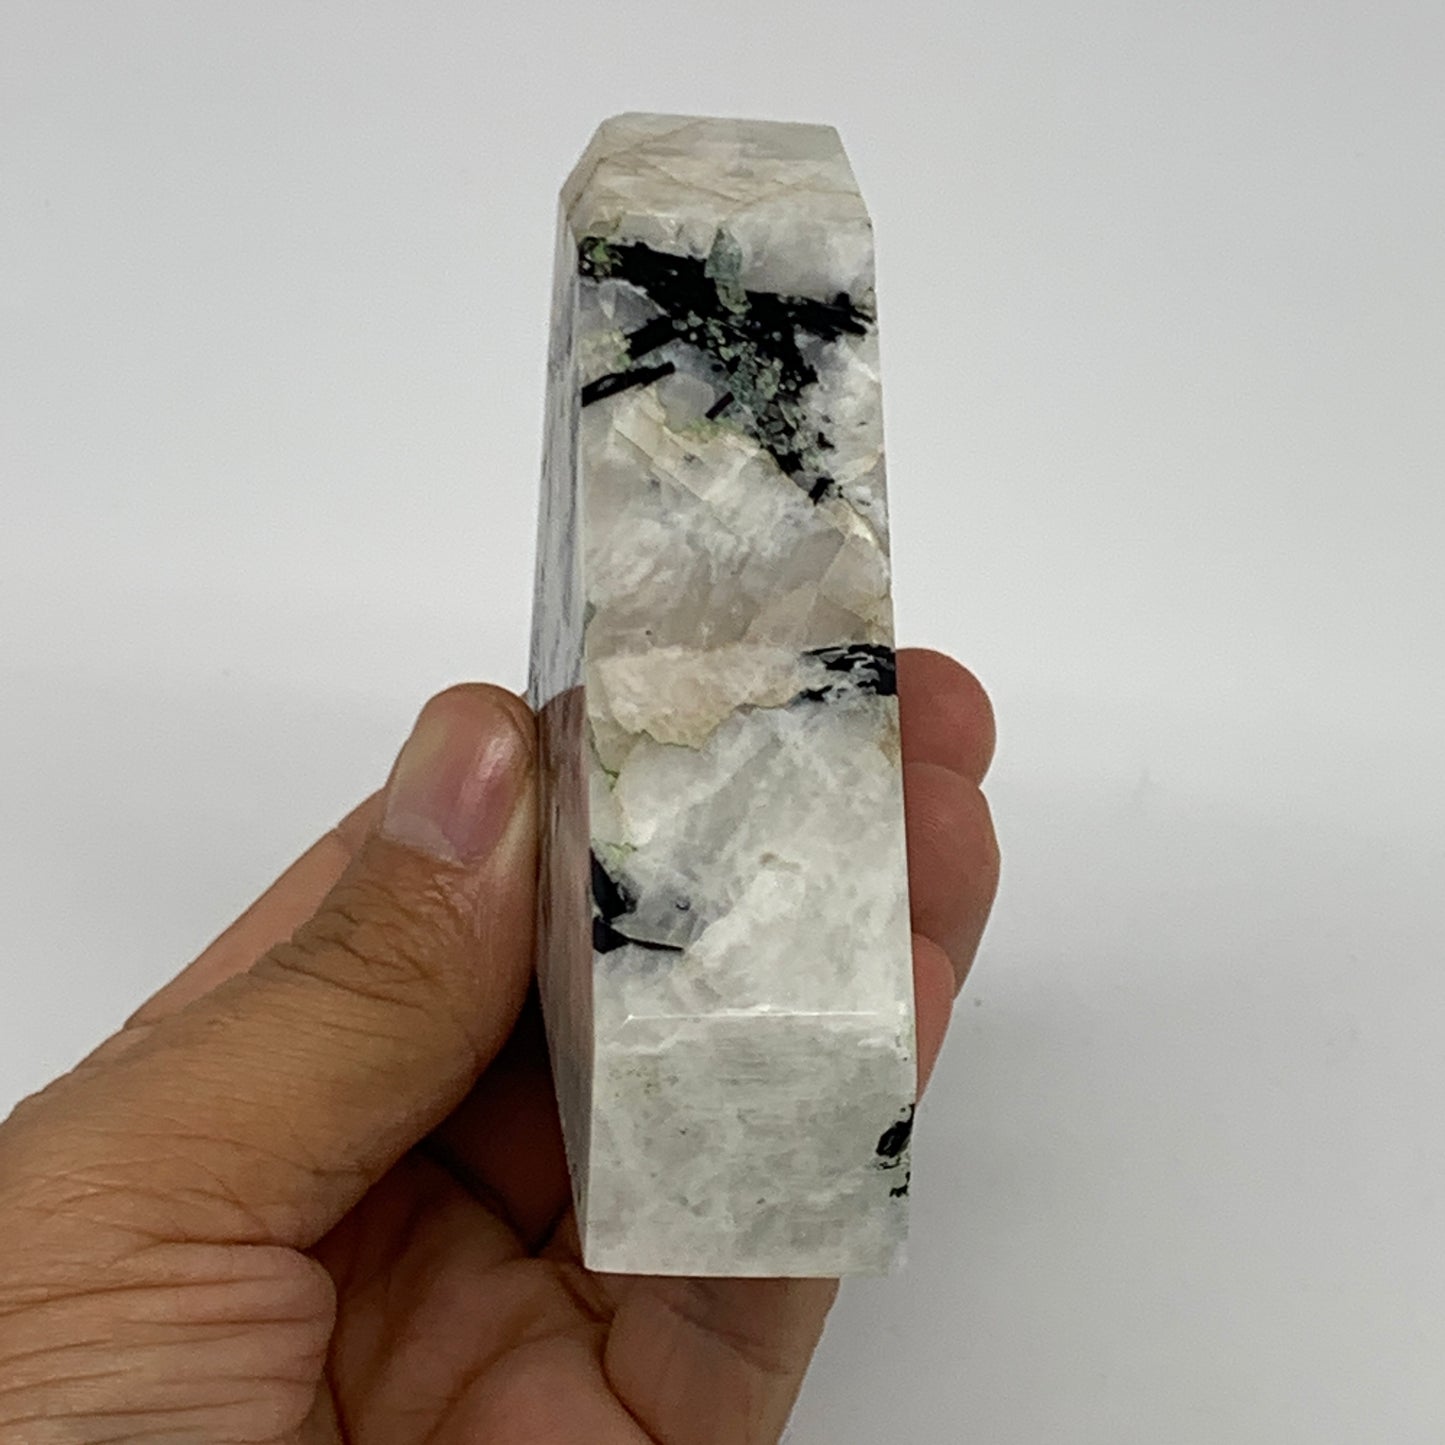 206.7g, 2.7"x2.6"x0.9", Rainbow Moonstone Freeform Crystal Polished @India, B216